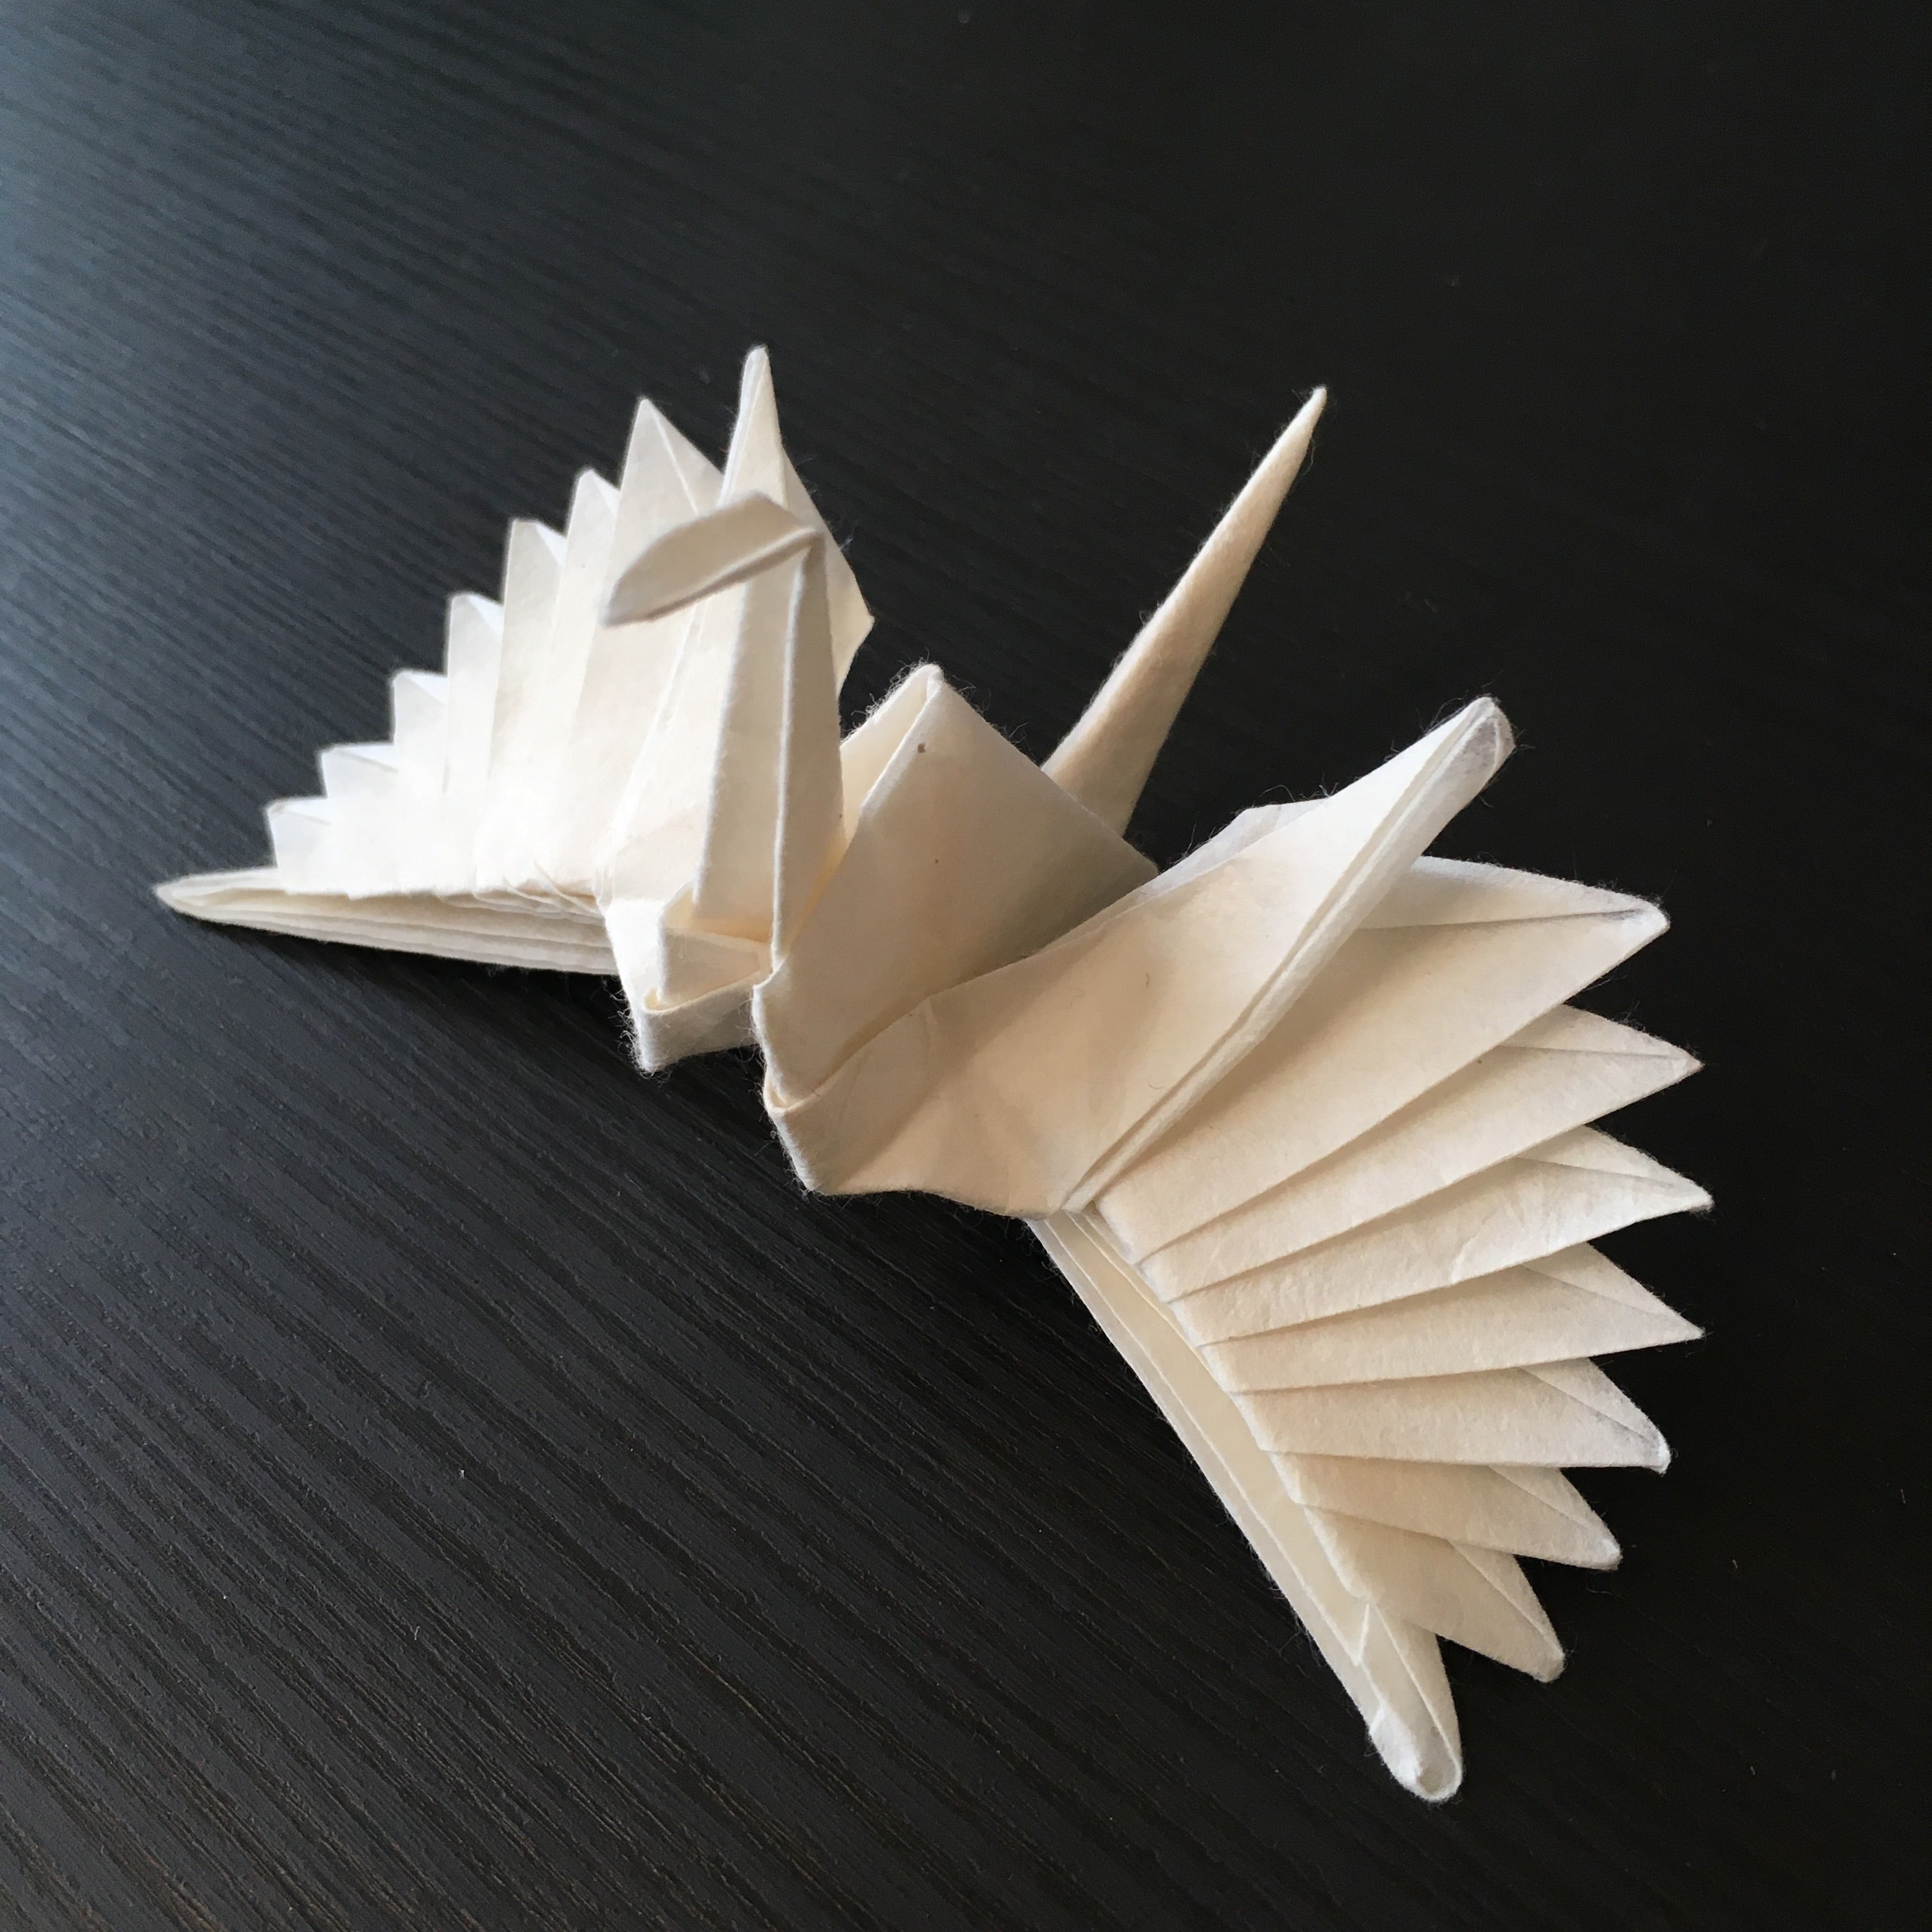 Origami Feathered Crane by Riccardo Foschi